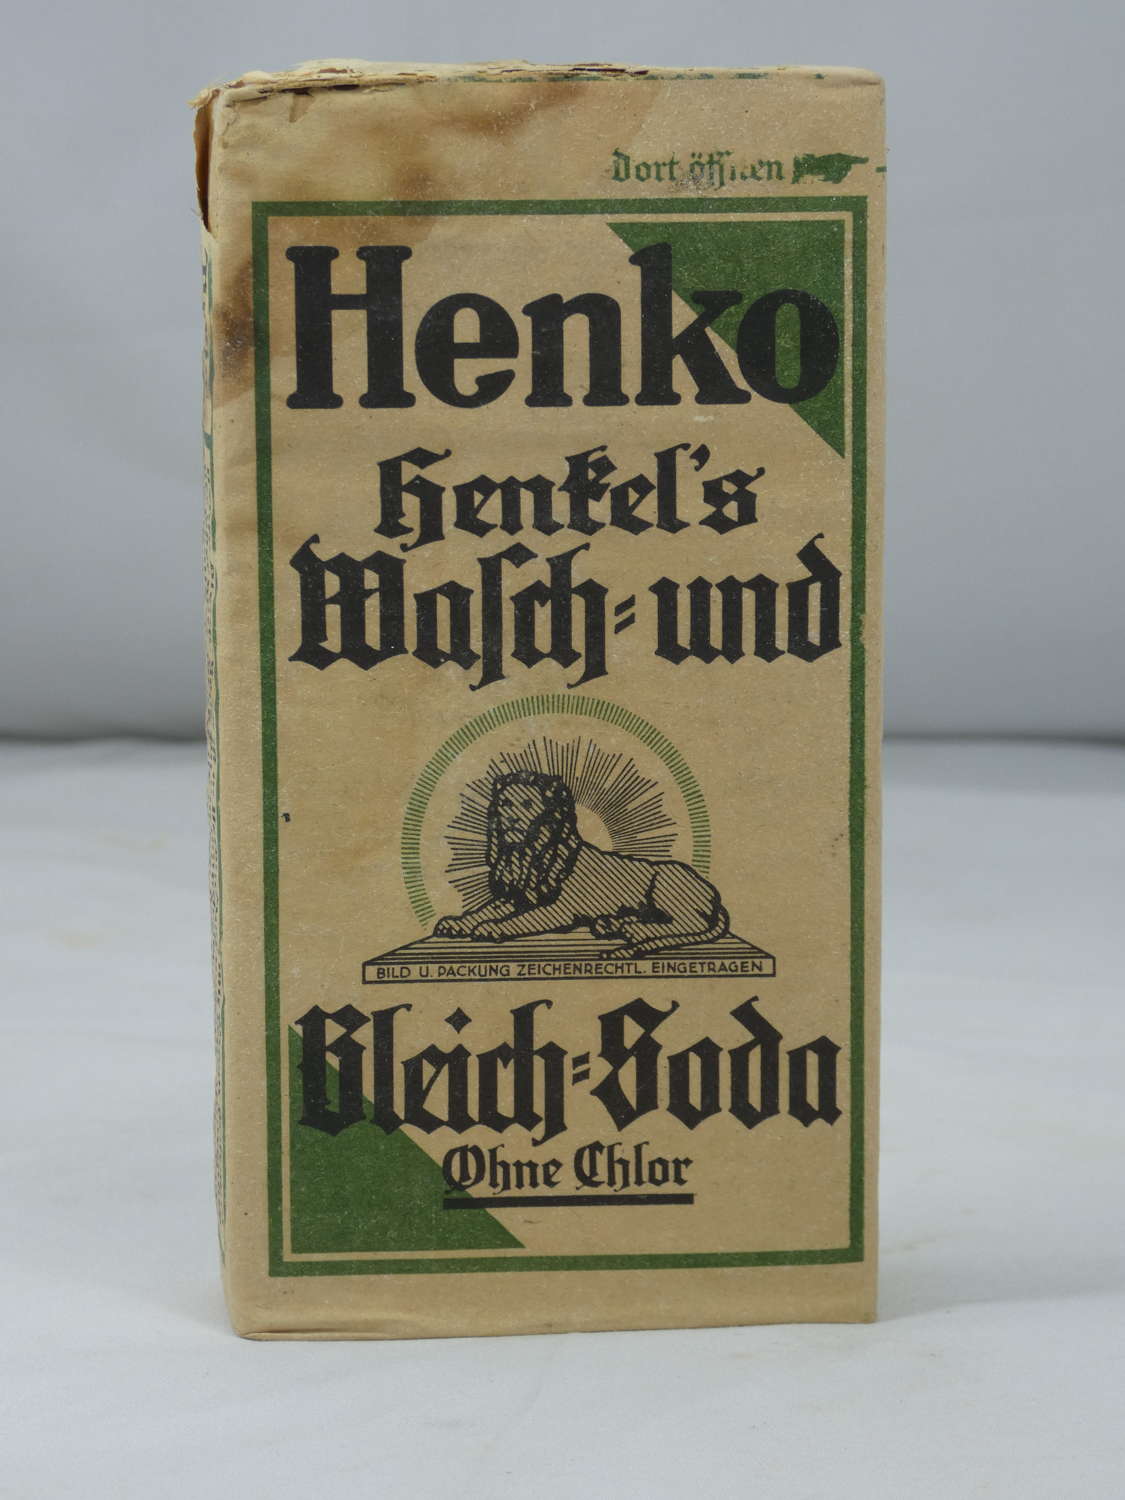 WW2 German Henko Soda With Contents